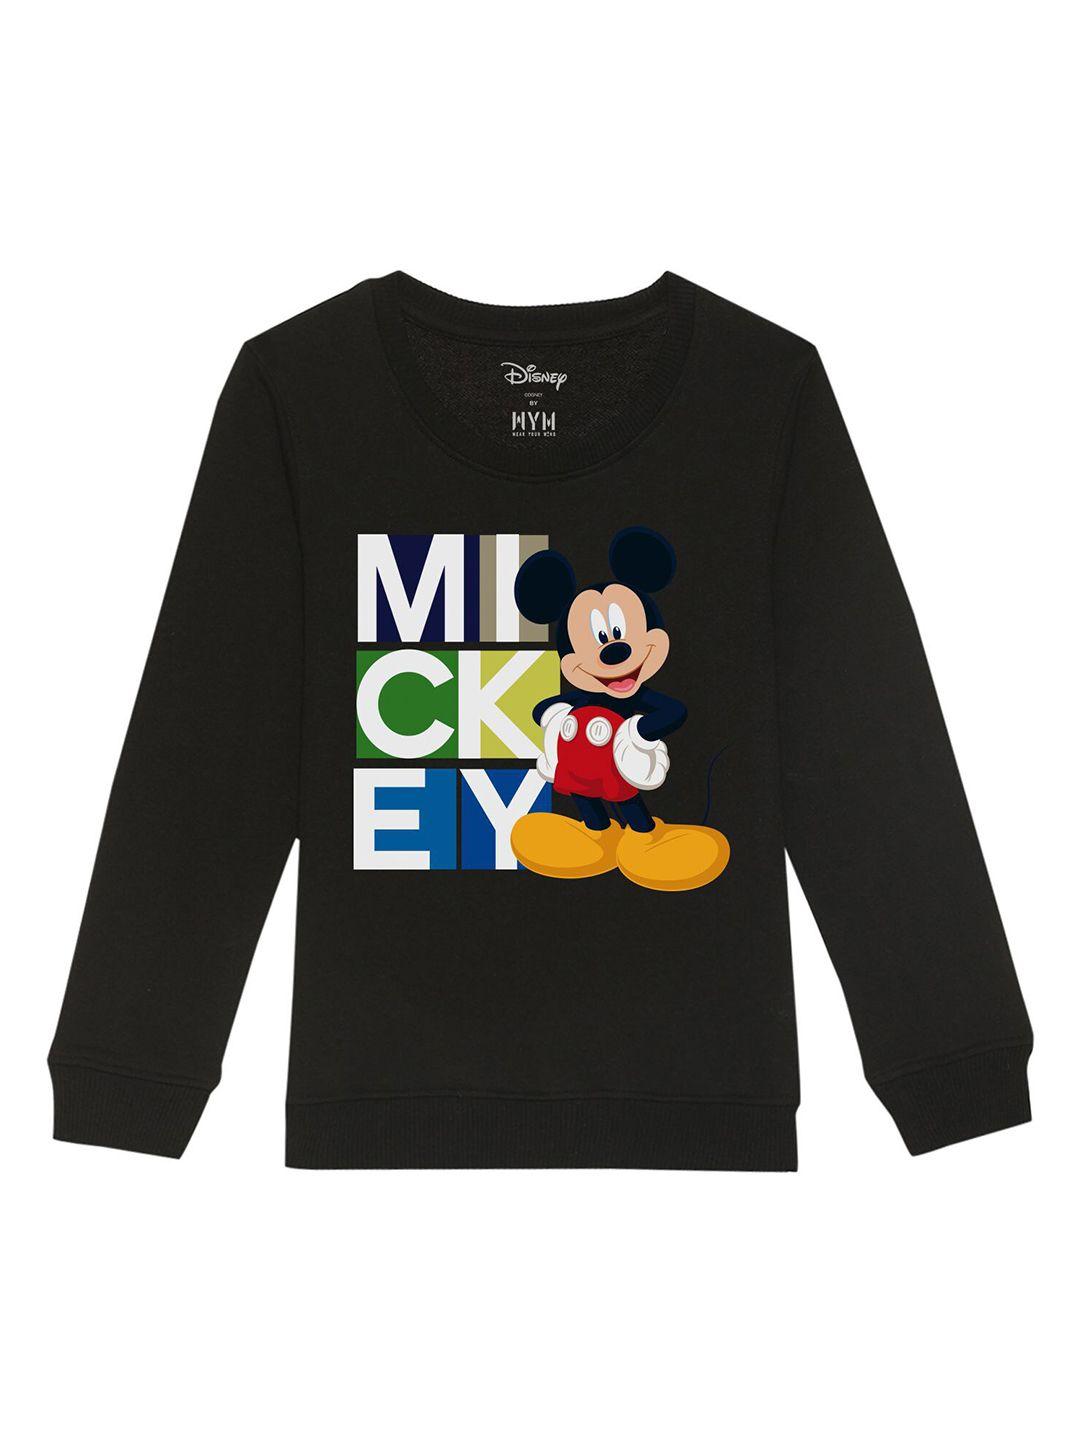 disney by wear your mind unisex kids black printed sweatshirt